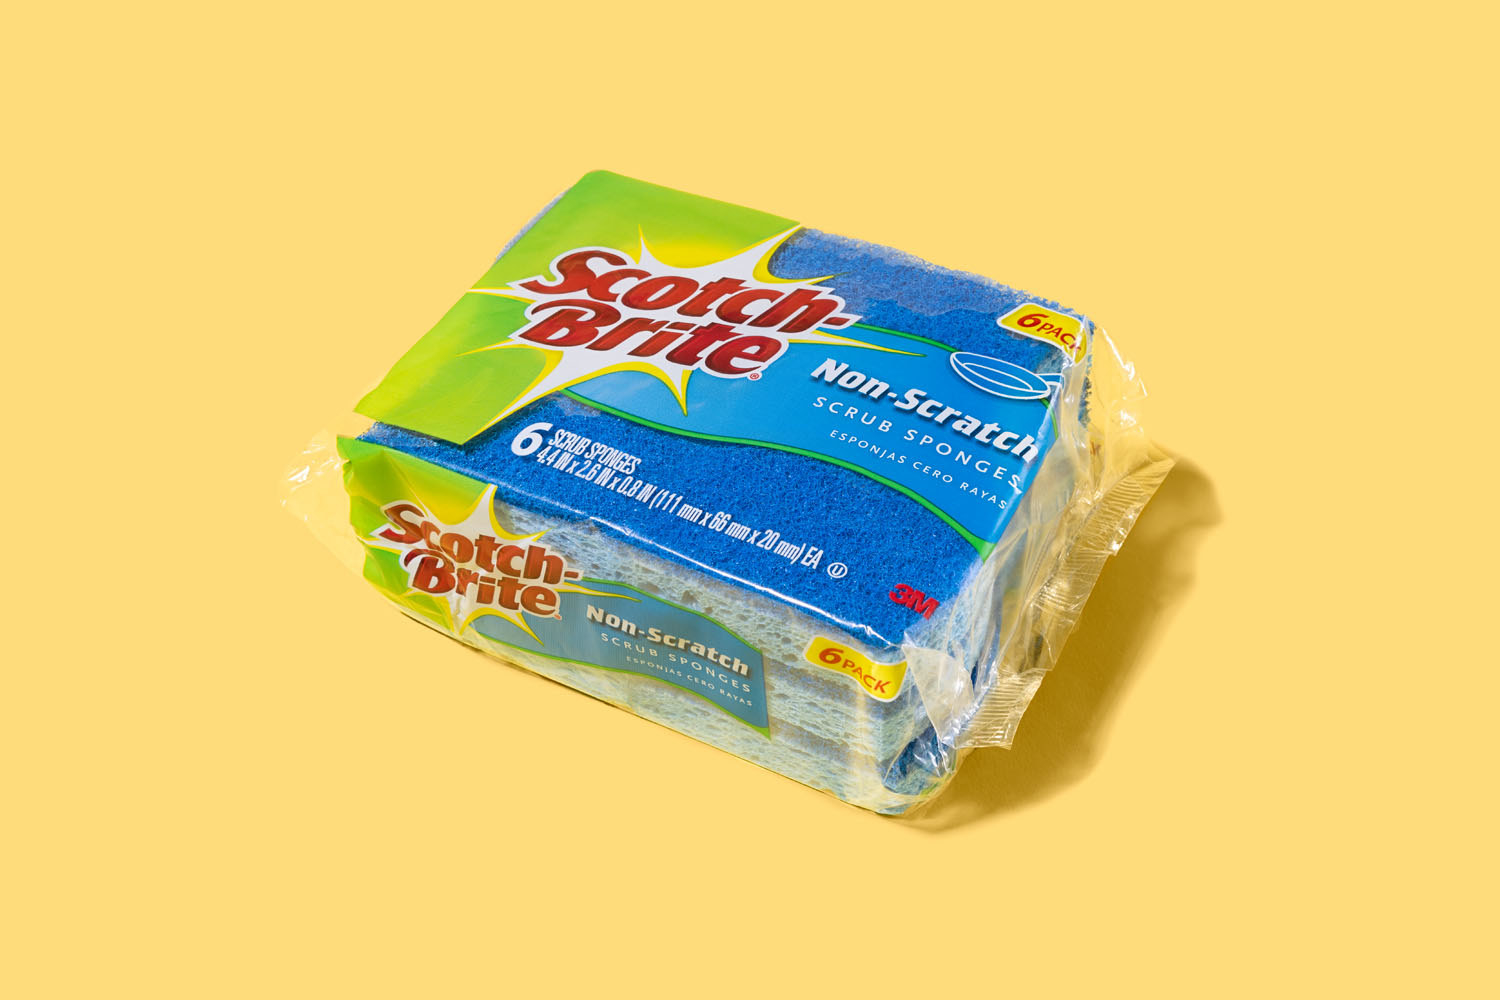 Scotch-Brite Sponge with scouring pad Polymer Foam Sponge with